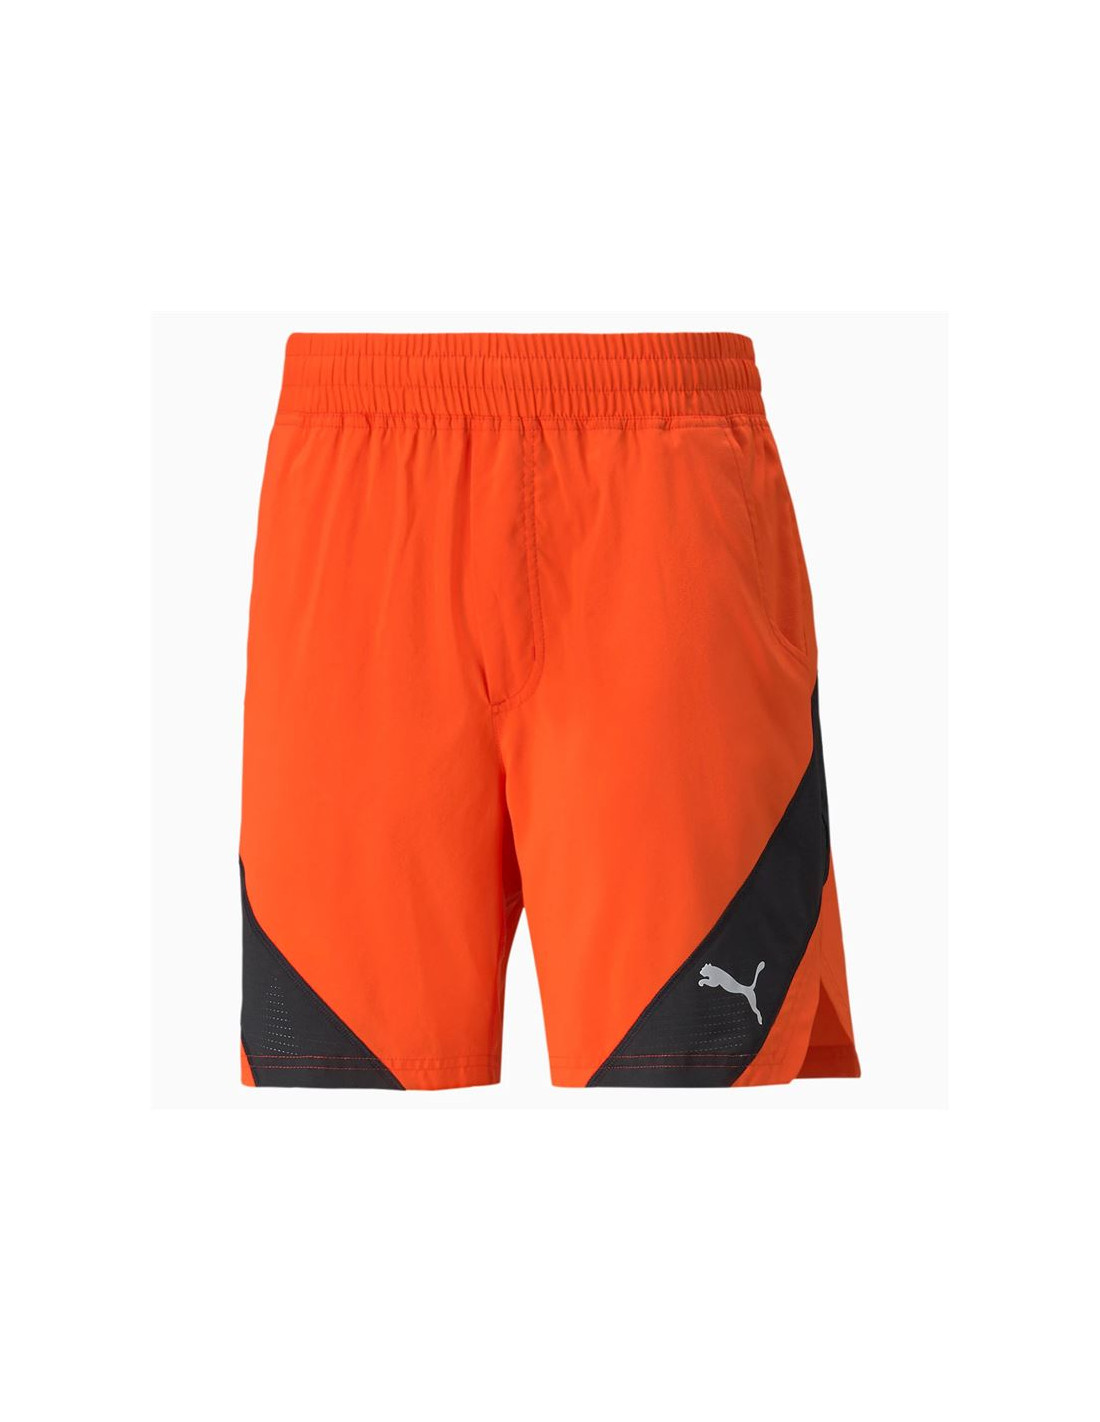 Pantalones cortos de trainning puma vent woven 7 m orange